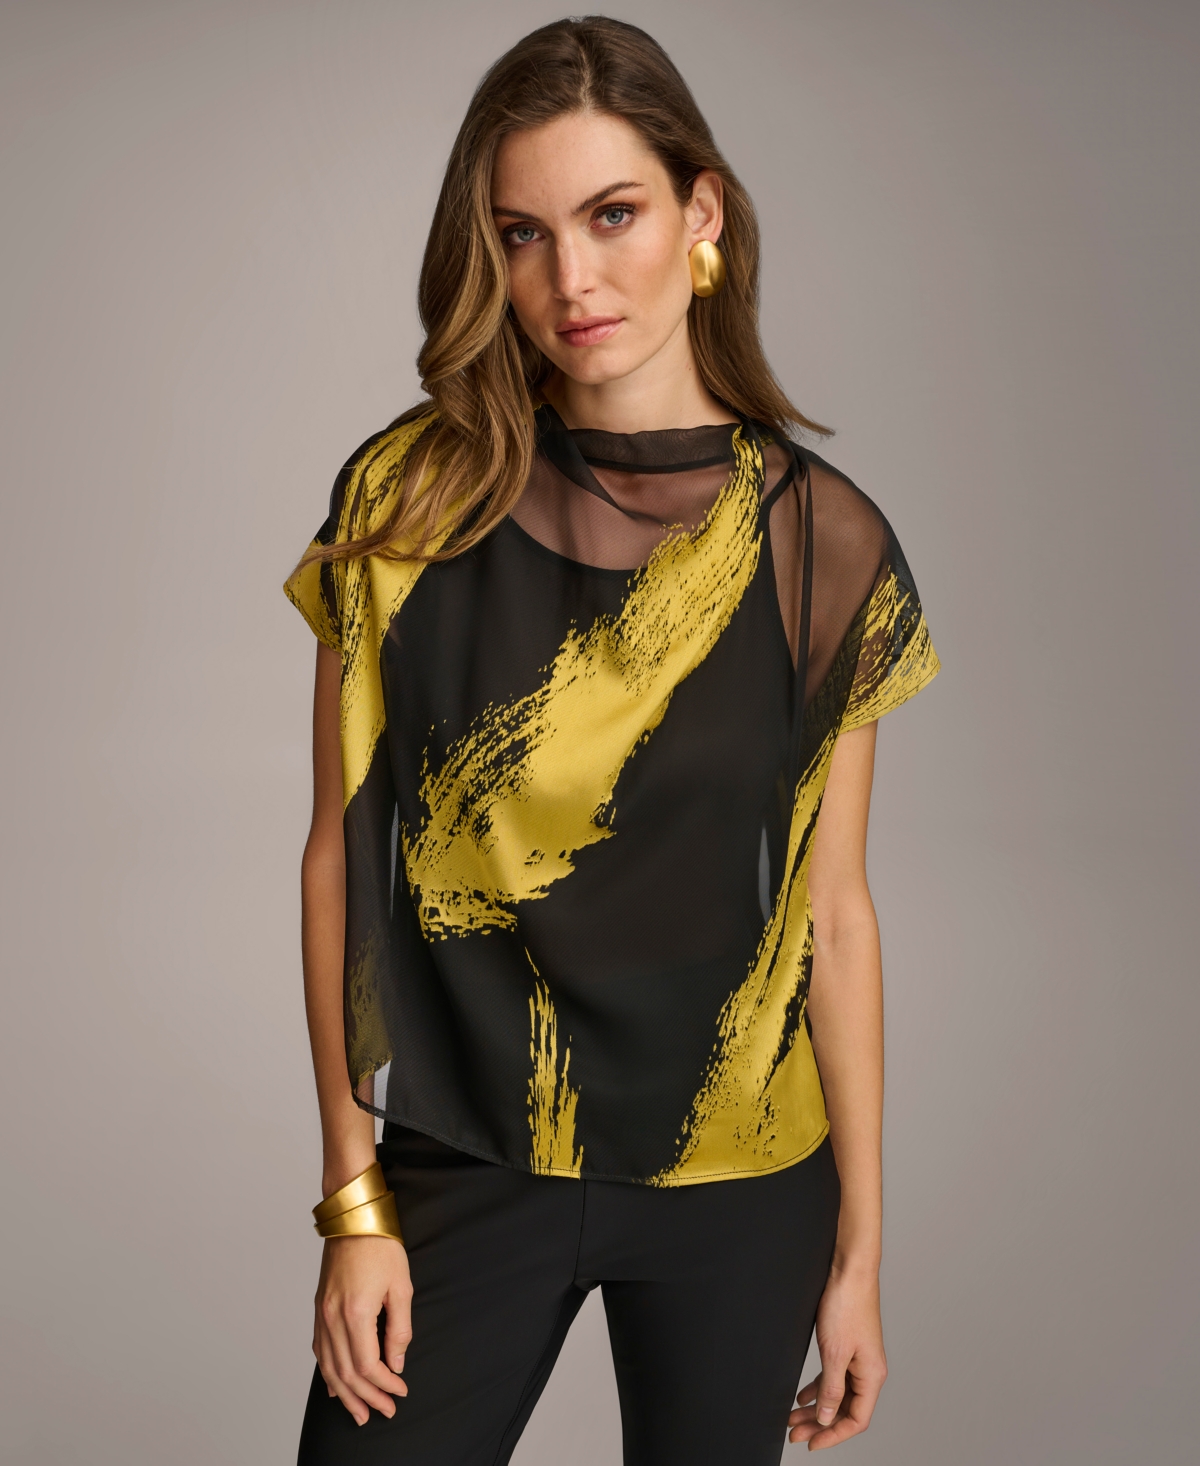 Women's Short Sleeve Metallic Print Blouse - Black/Gold